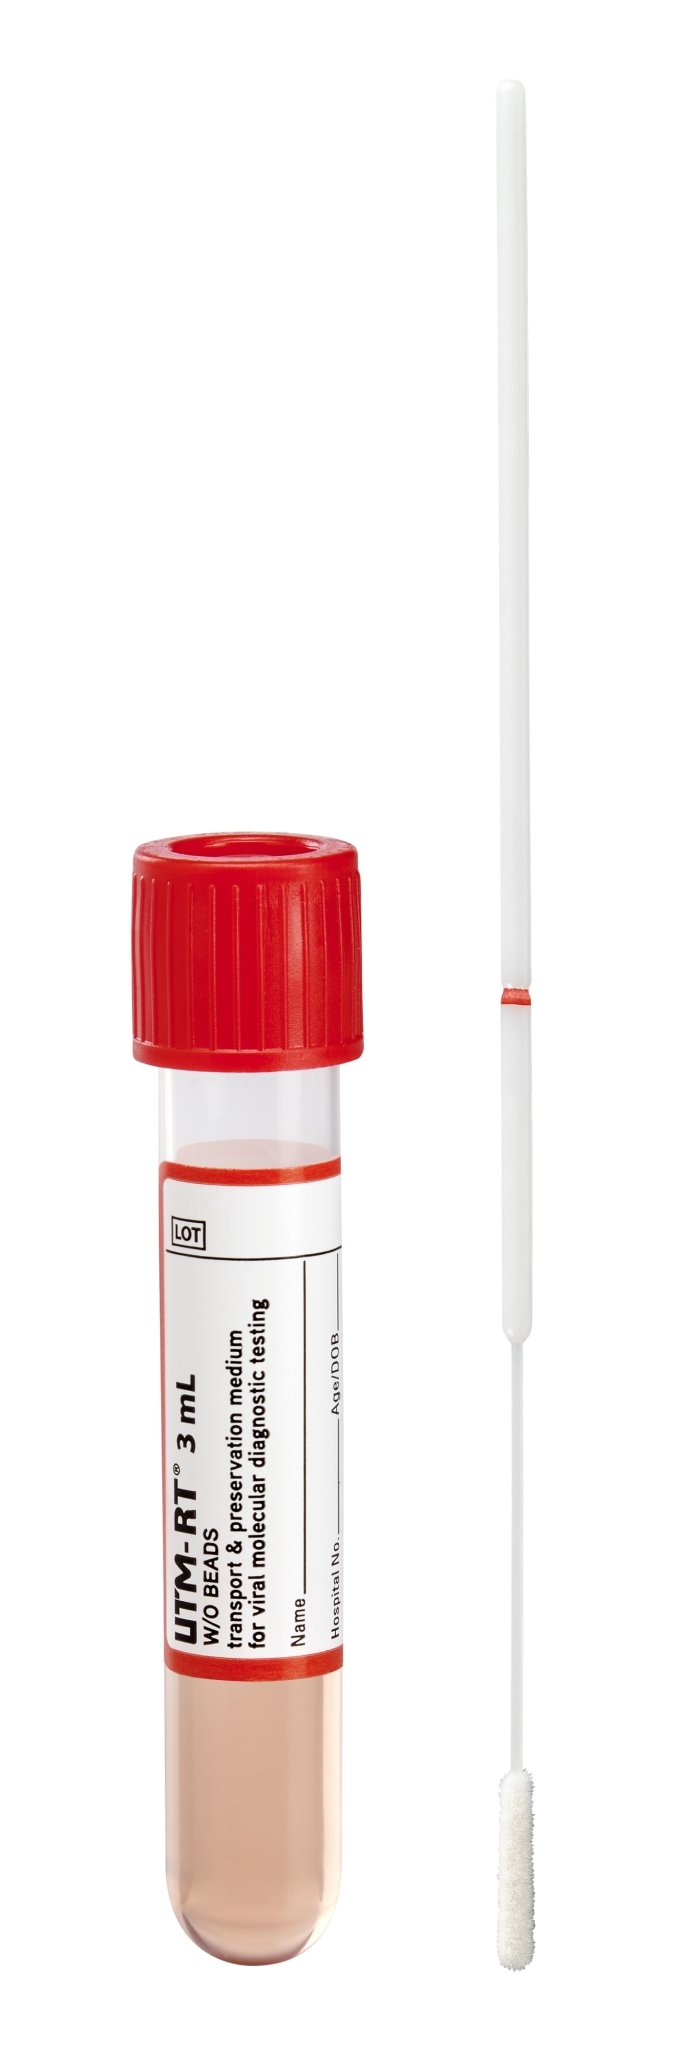 UTM® 3C071N - Mini Tip Specimen Collection Kit with Small Tube - COPAN Diagnostics, Inc.